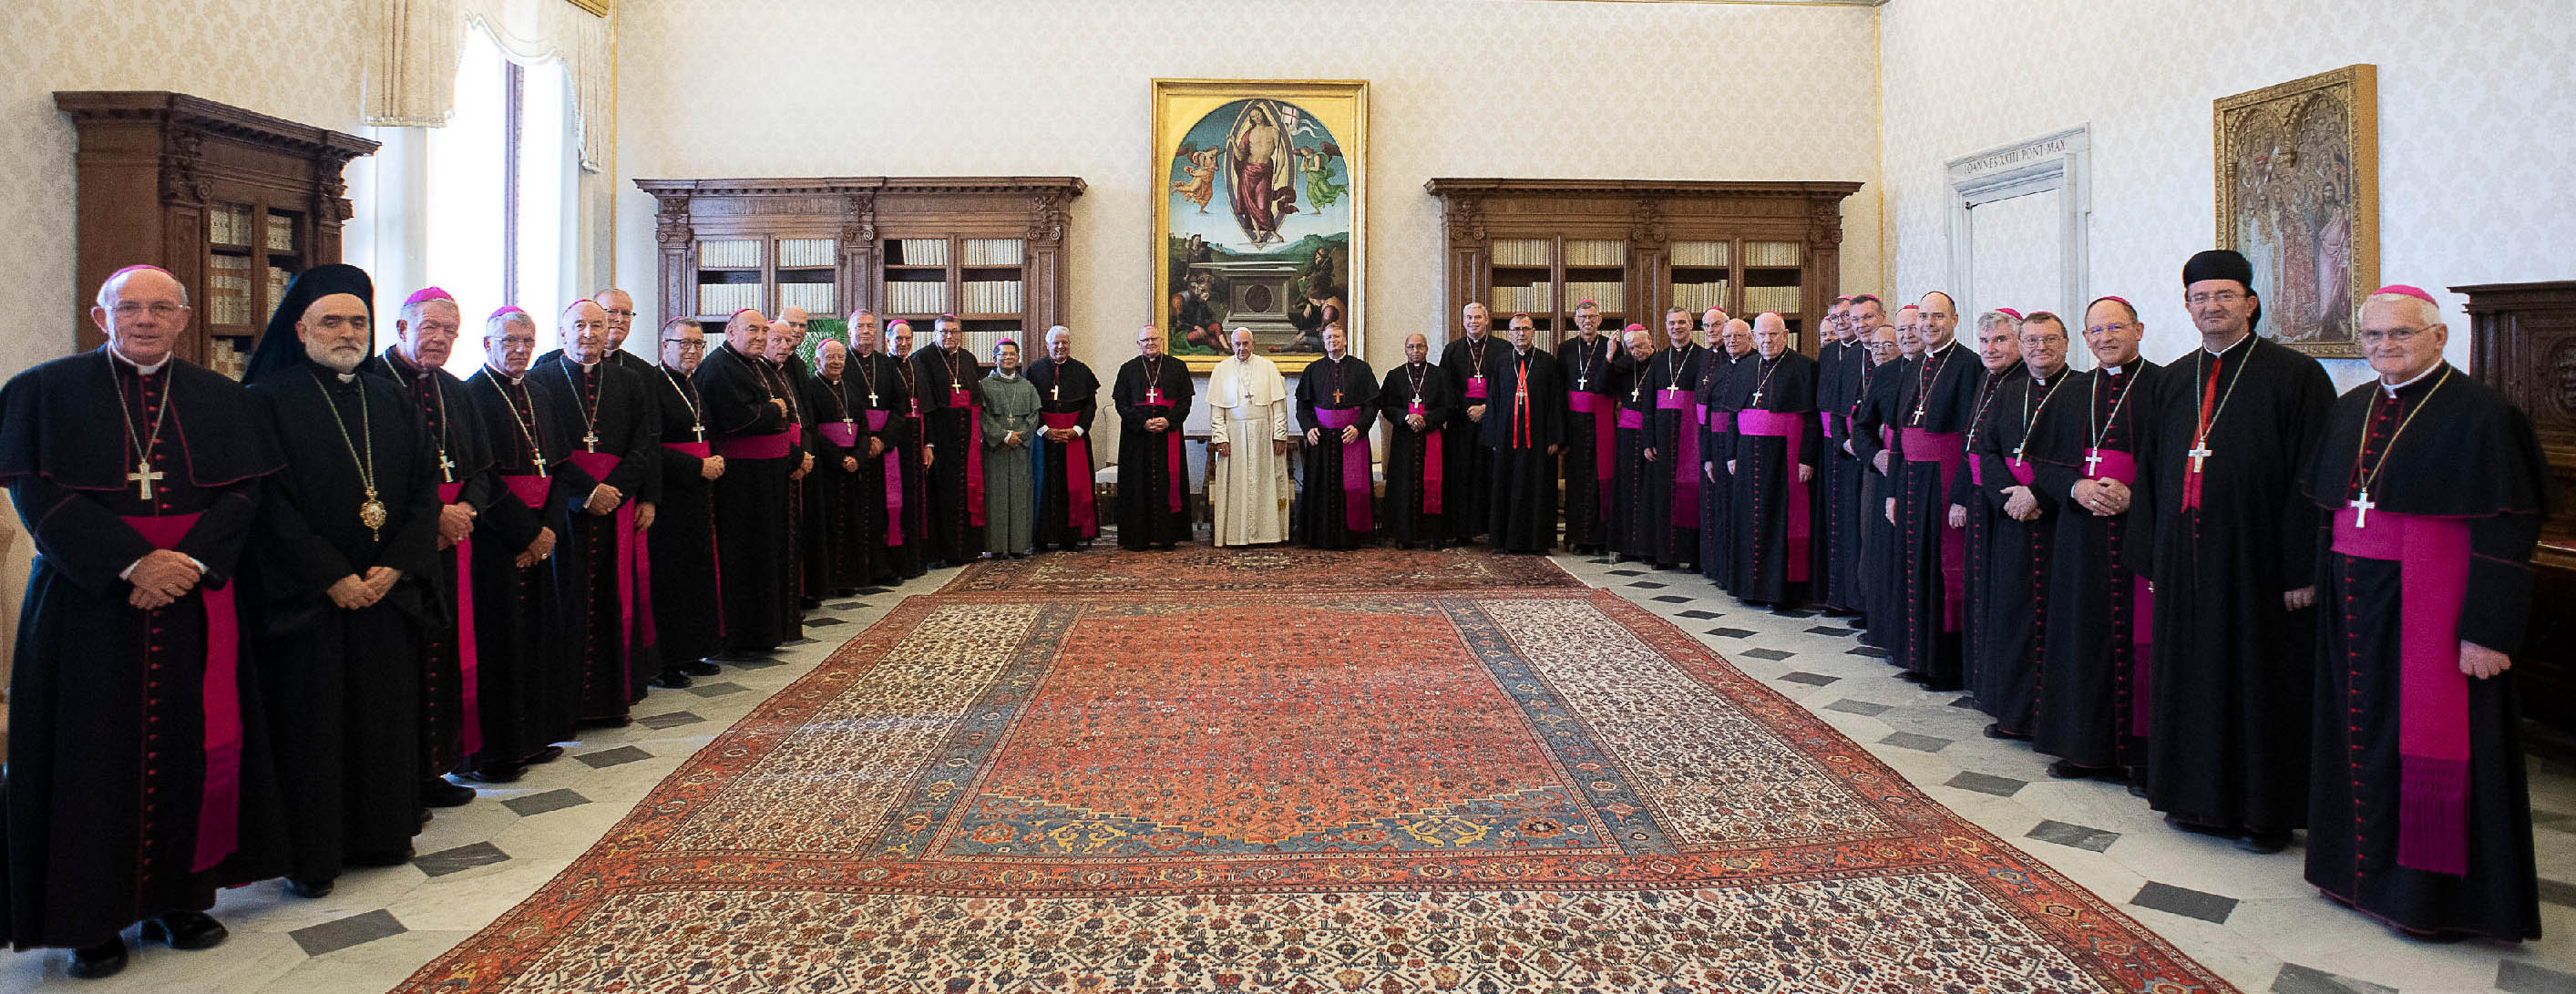 Australian bishops meet pray St Peter's tomb - ACBC Media